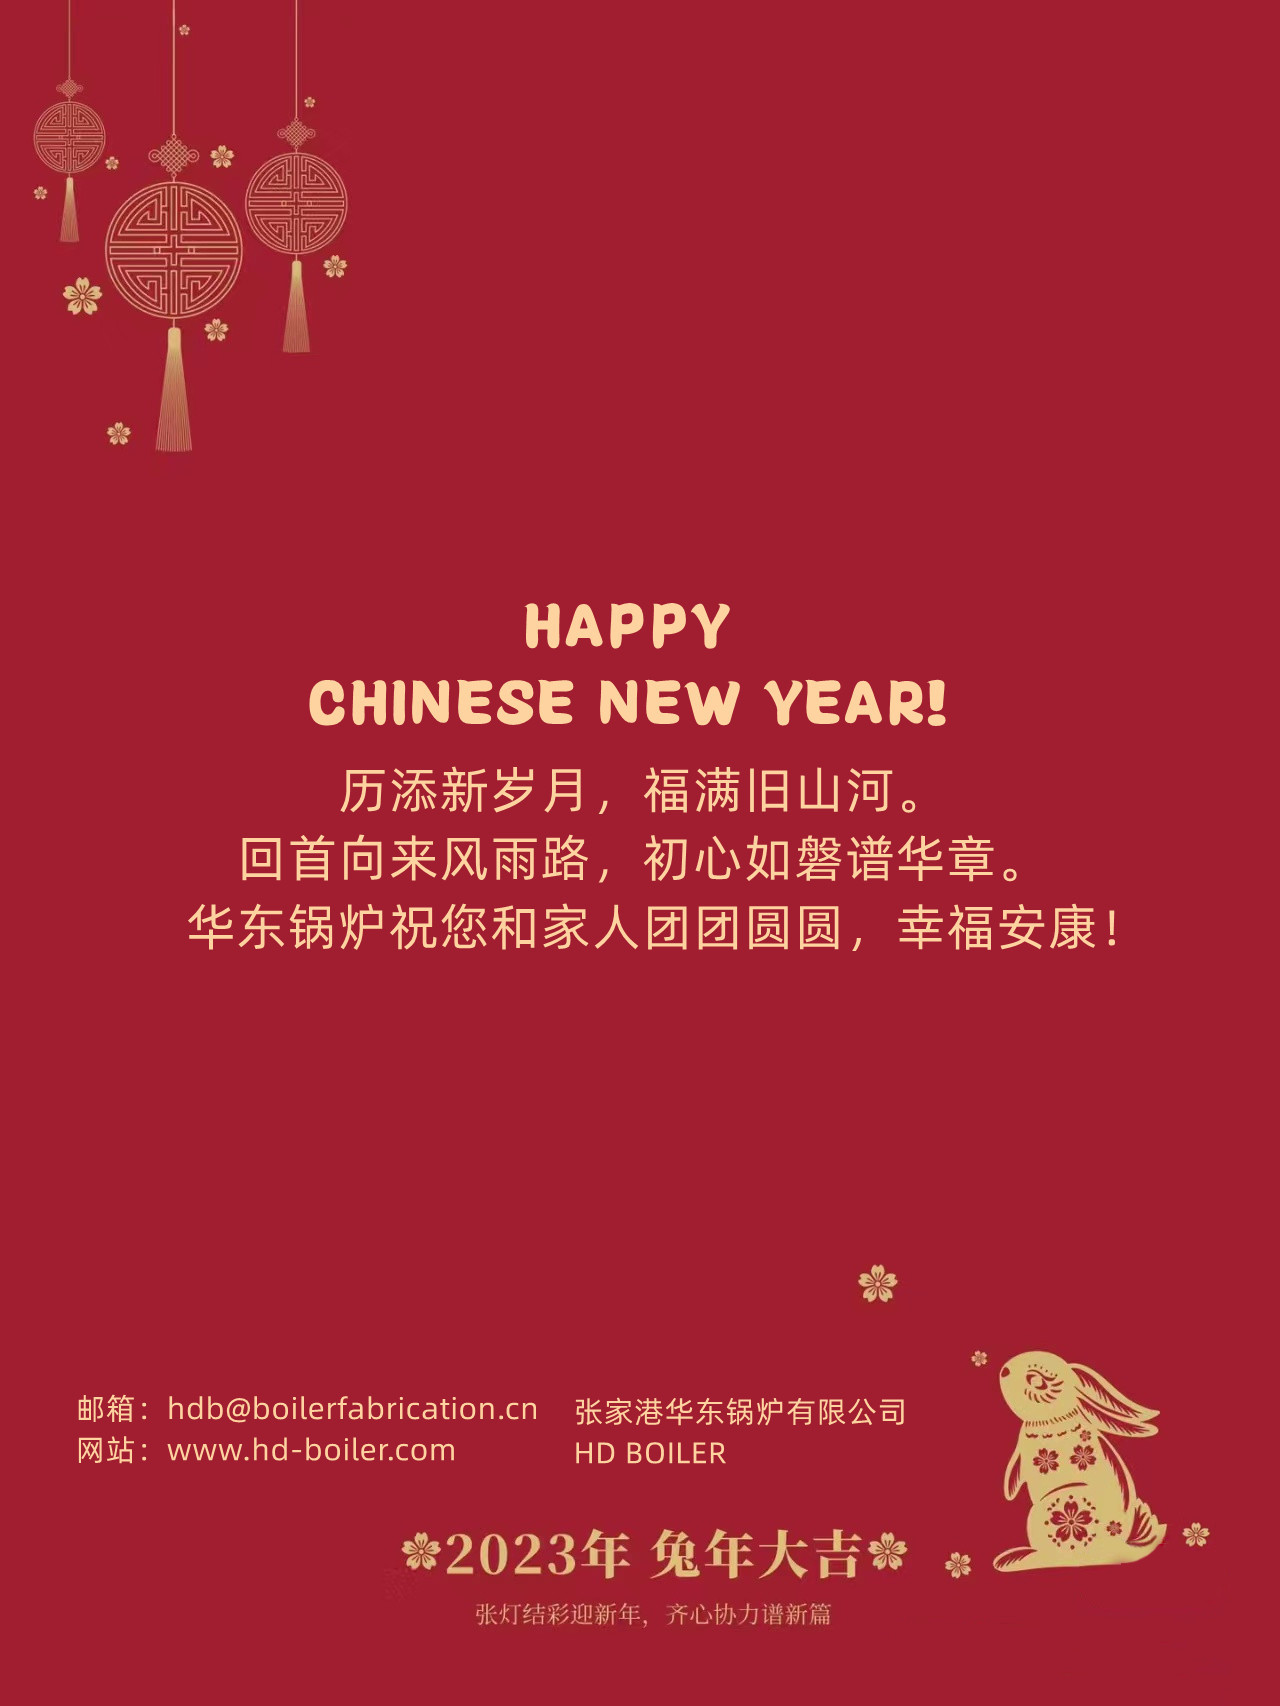 2023, Happy Chinese New Year!